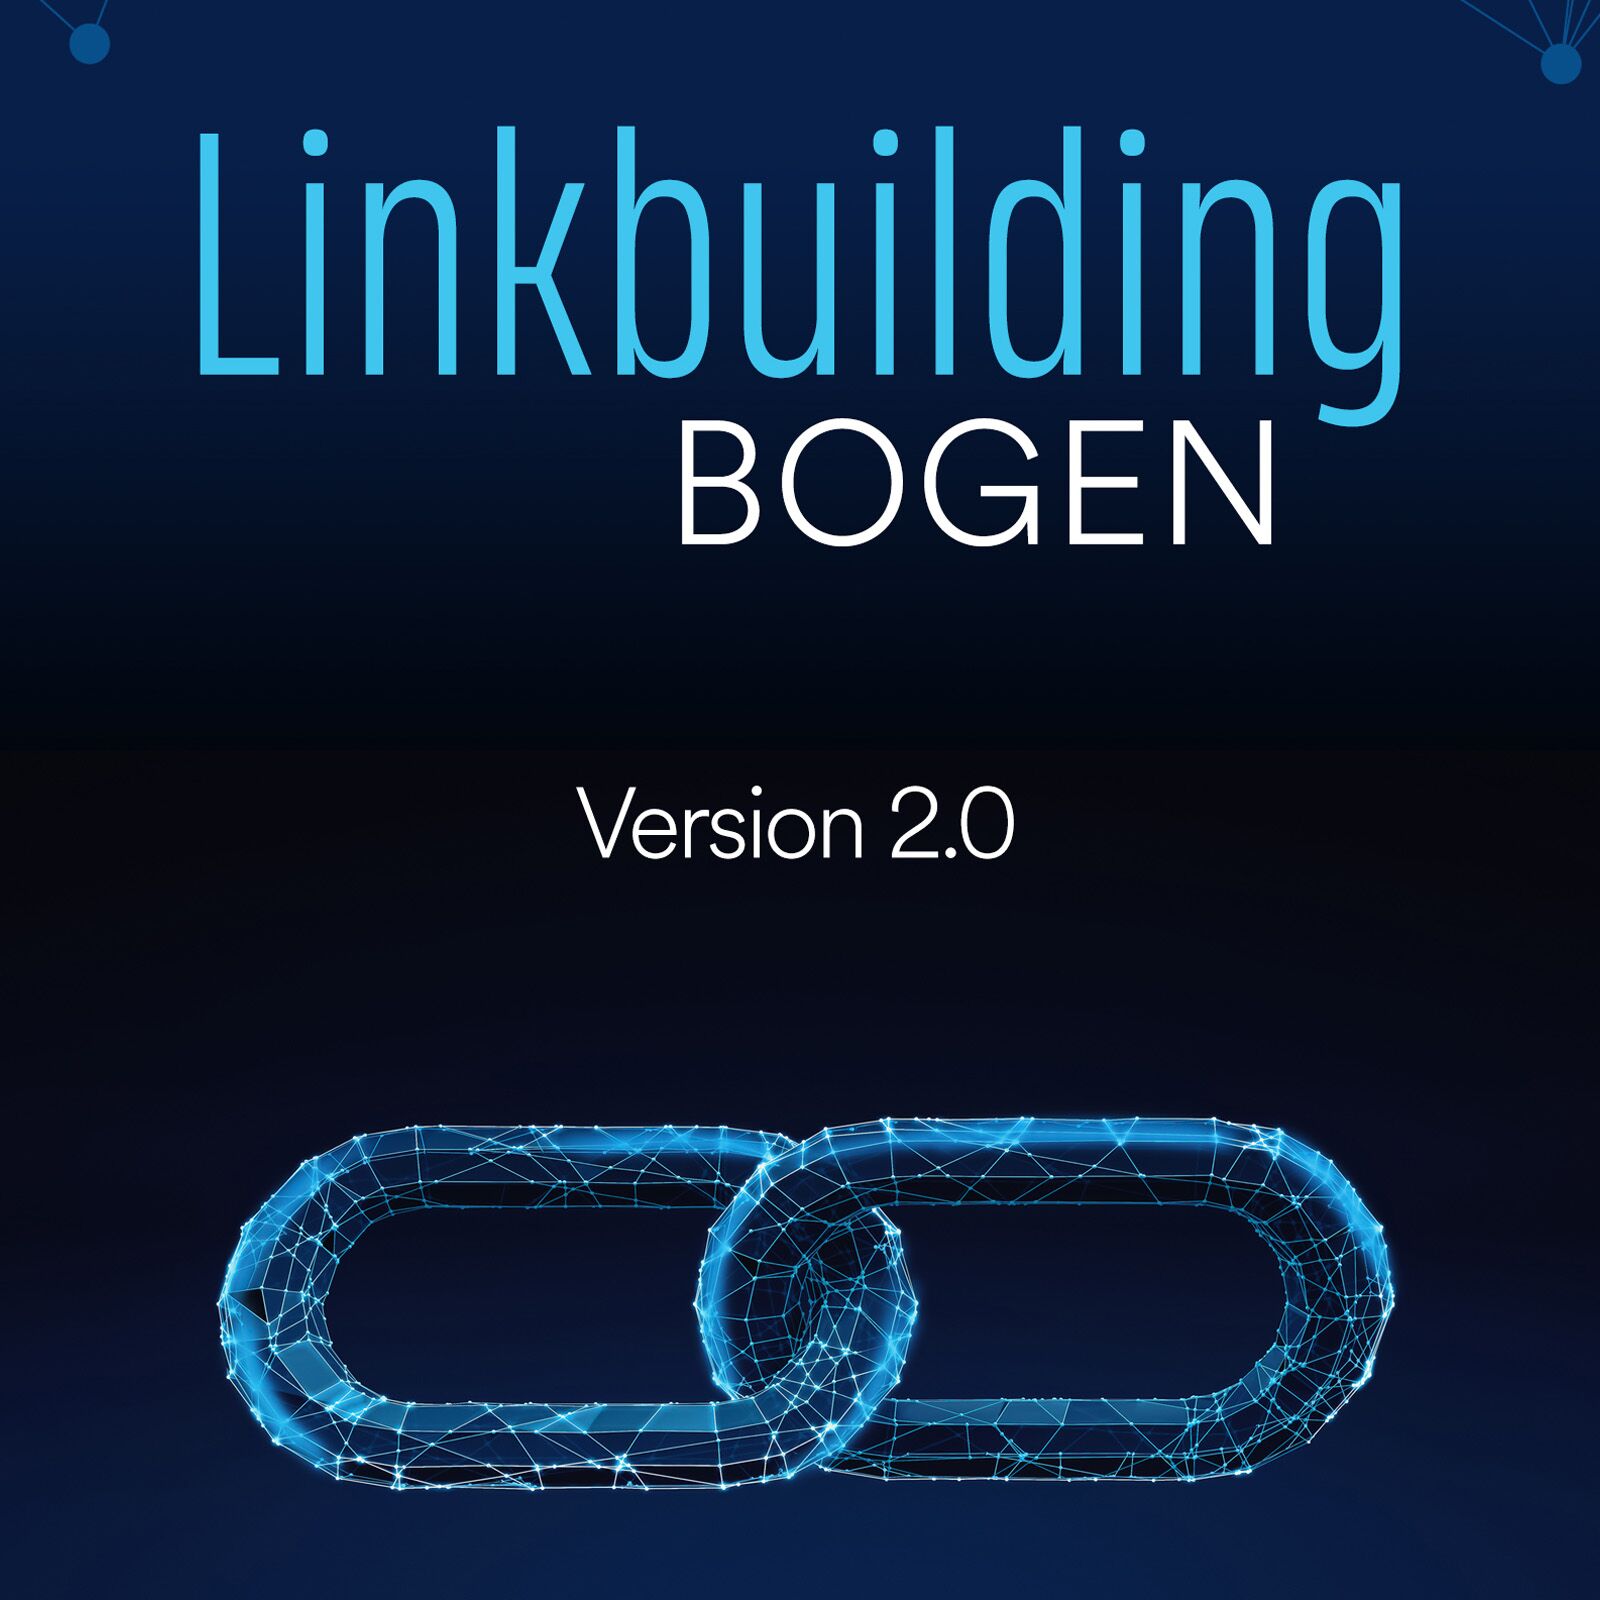 Linkbuilding bogen version 20.